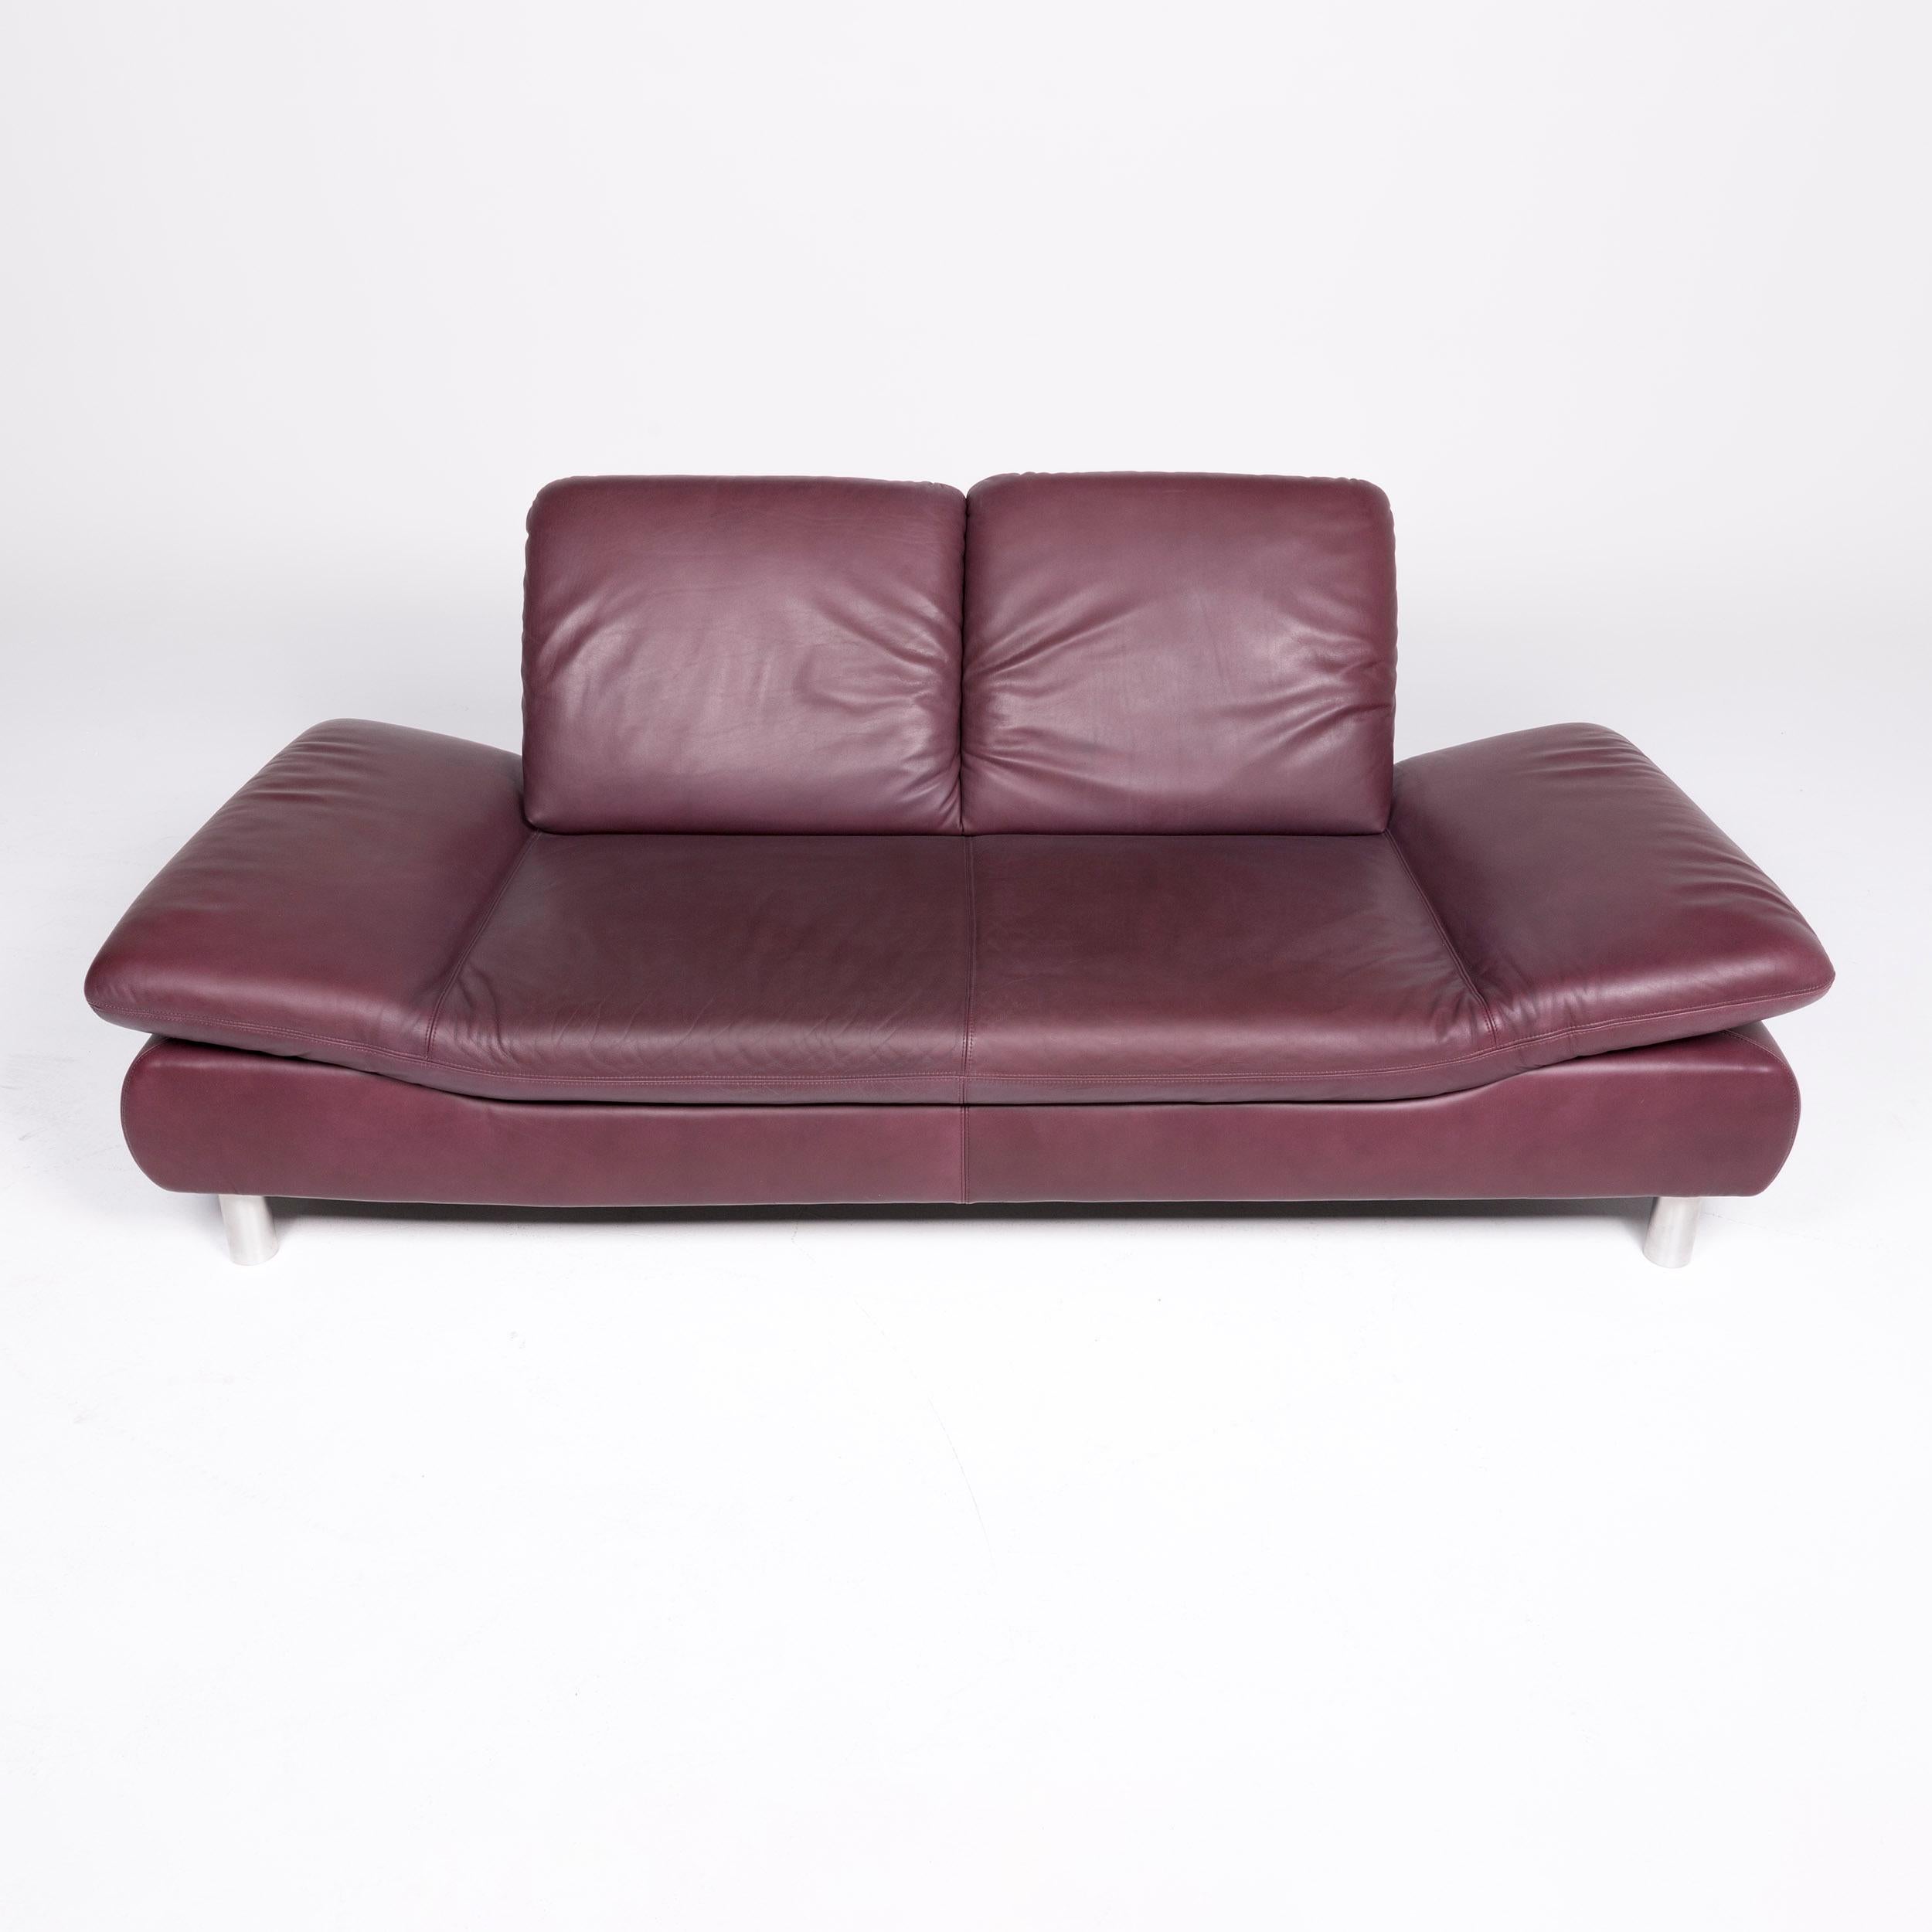 Koinor Rivoli Designer Leather Sofa Purple Genuine Leather Two-Seat Couch For Sale 1